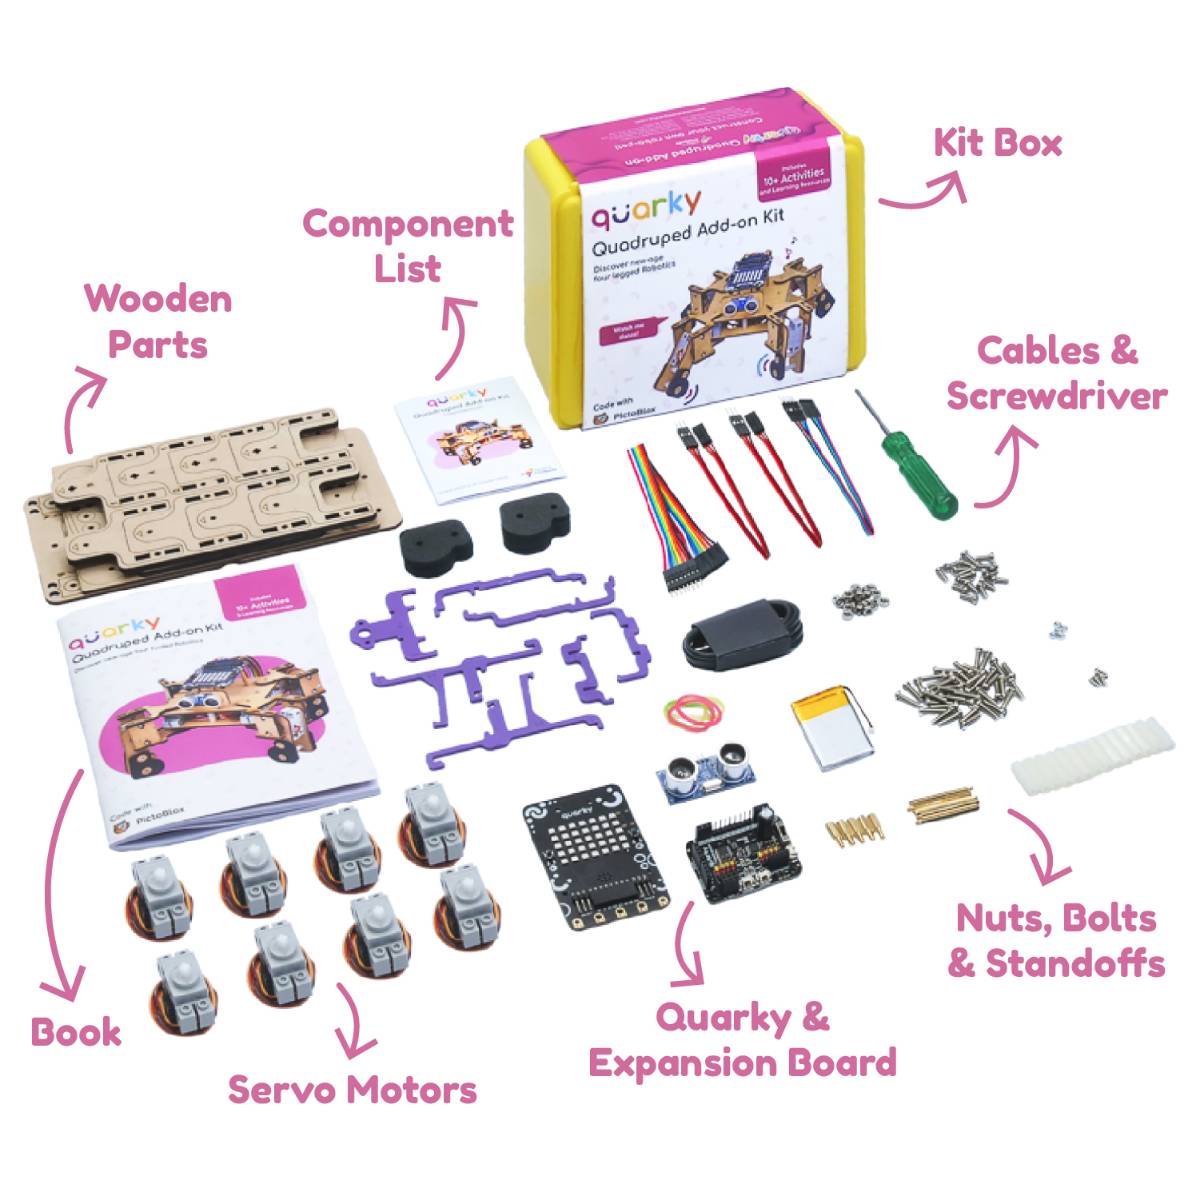 Quarky Quadruped Add-on Kit components: Sensors, expansion board, cables & screwdrivers, servo motors, and etc.